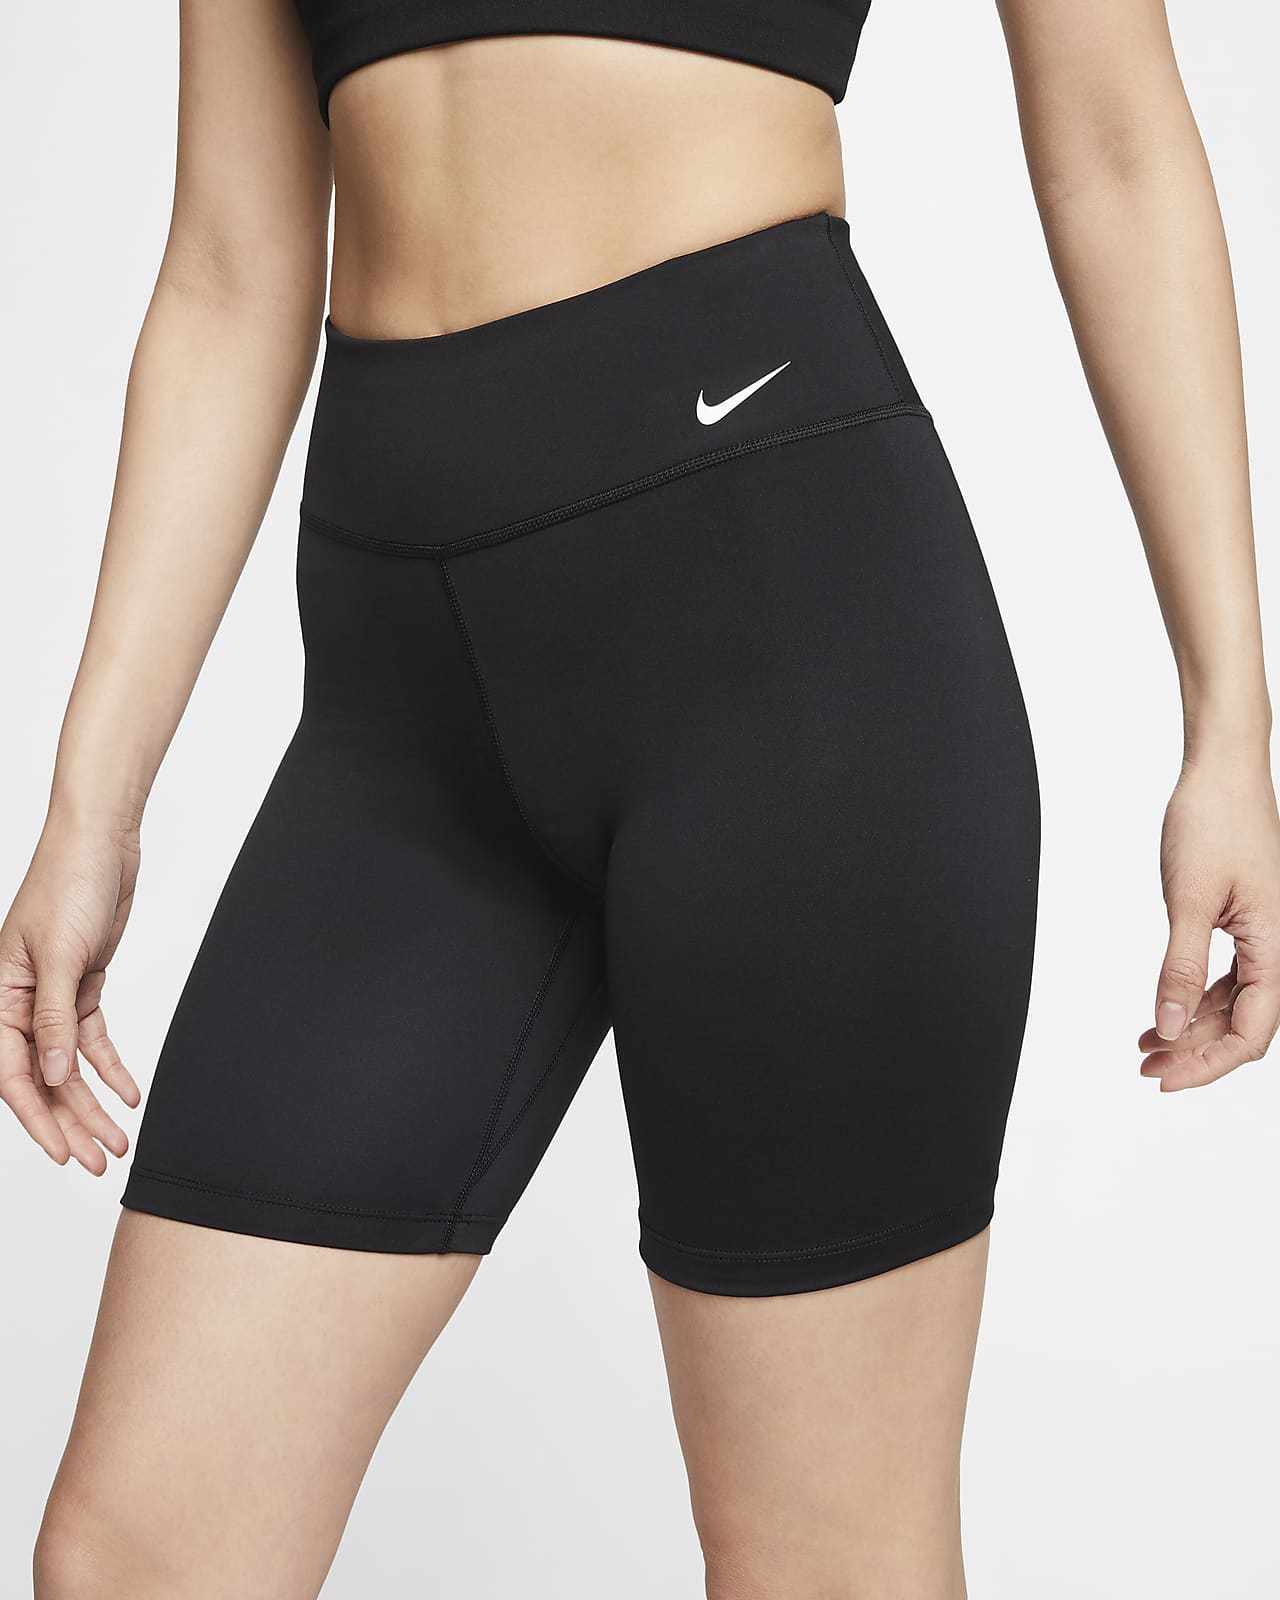 Nike One Women's Shorts. Nike SG